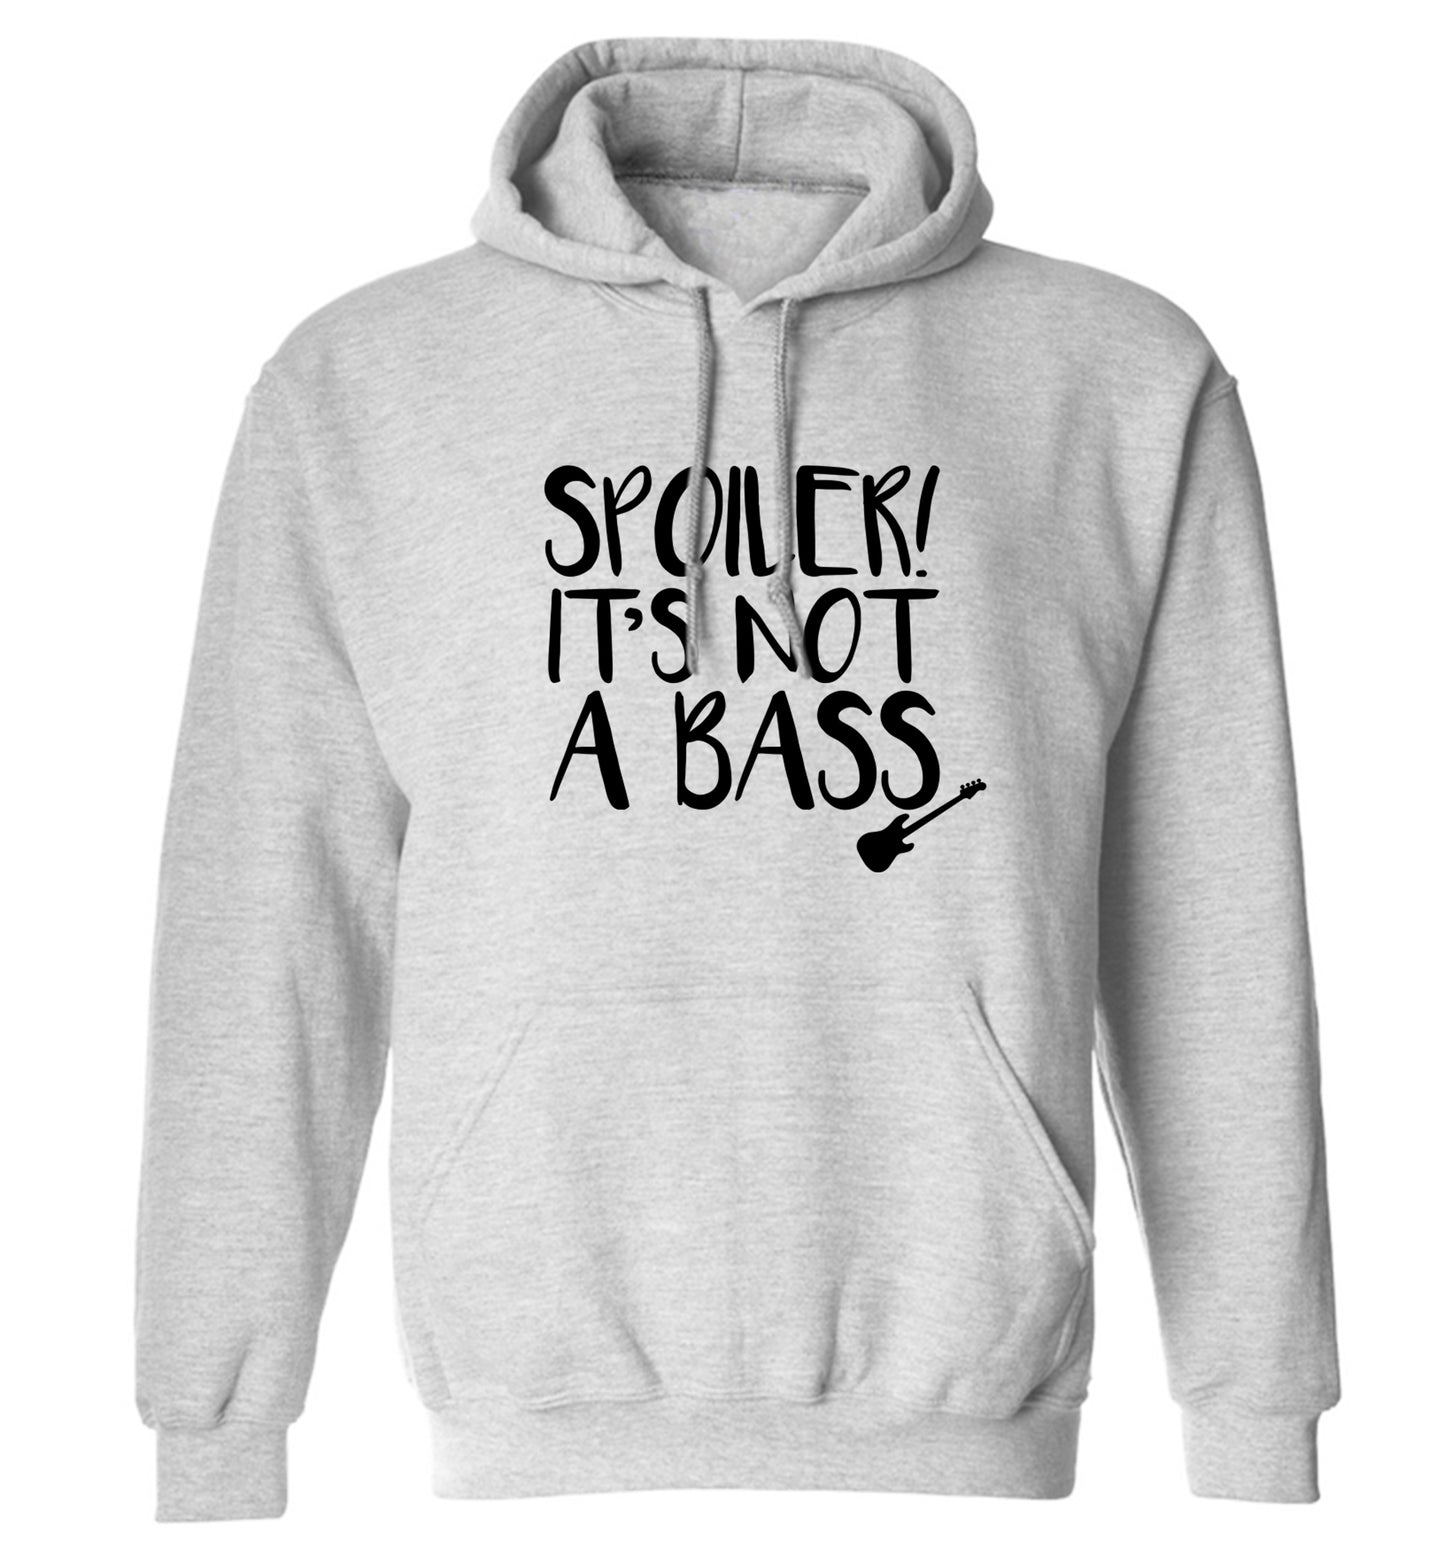 Spoiler it's not a bass adults unisex grey hoodie 2XL